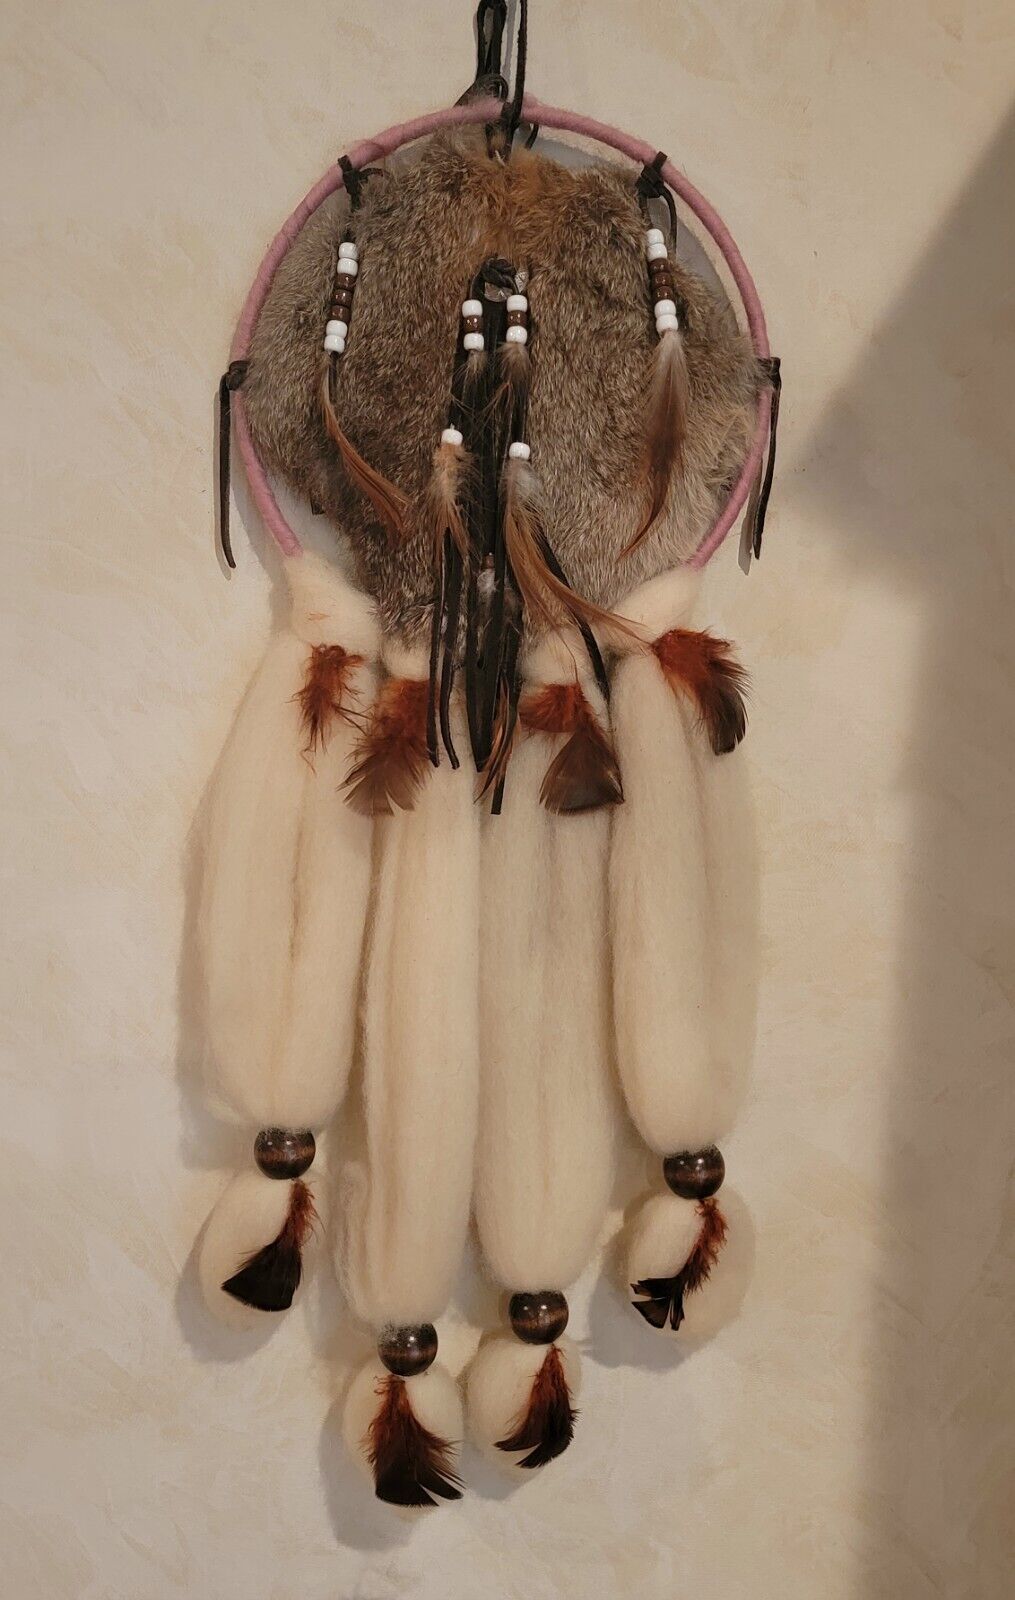 Native American Art Mandala Feathers Leather Beads Wool Dream Catcher Vintage